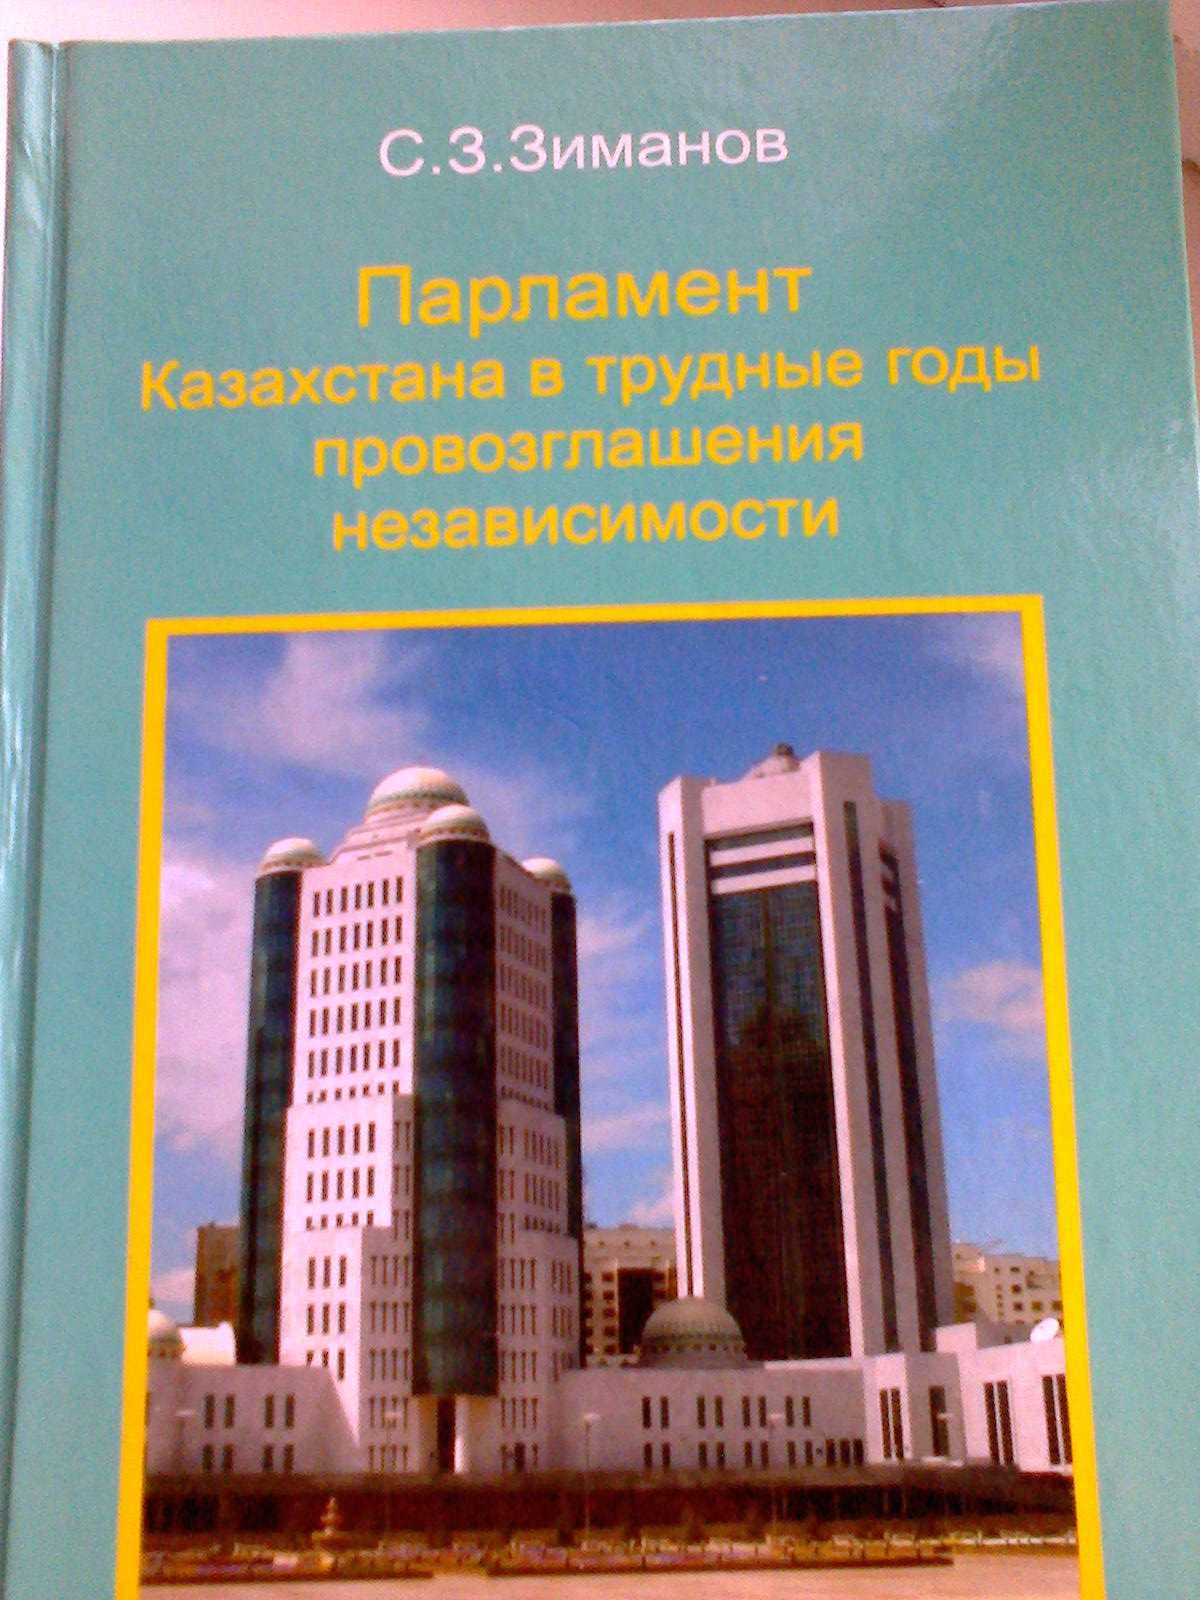 Книга С.Зиманова